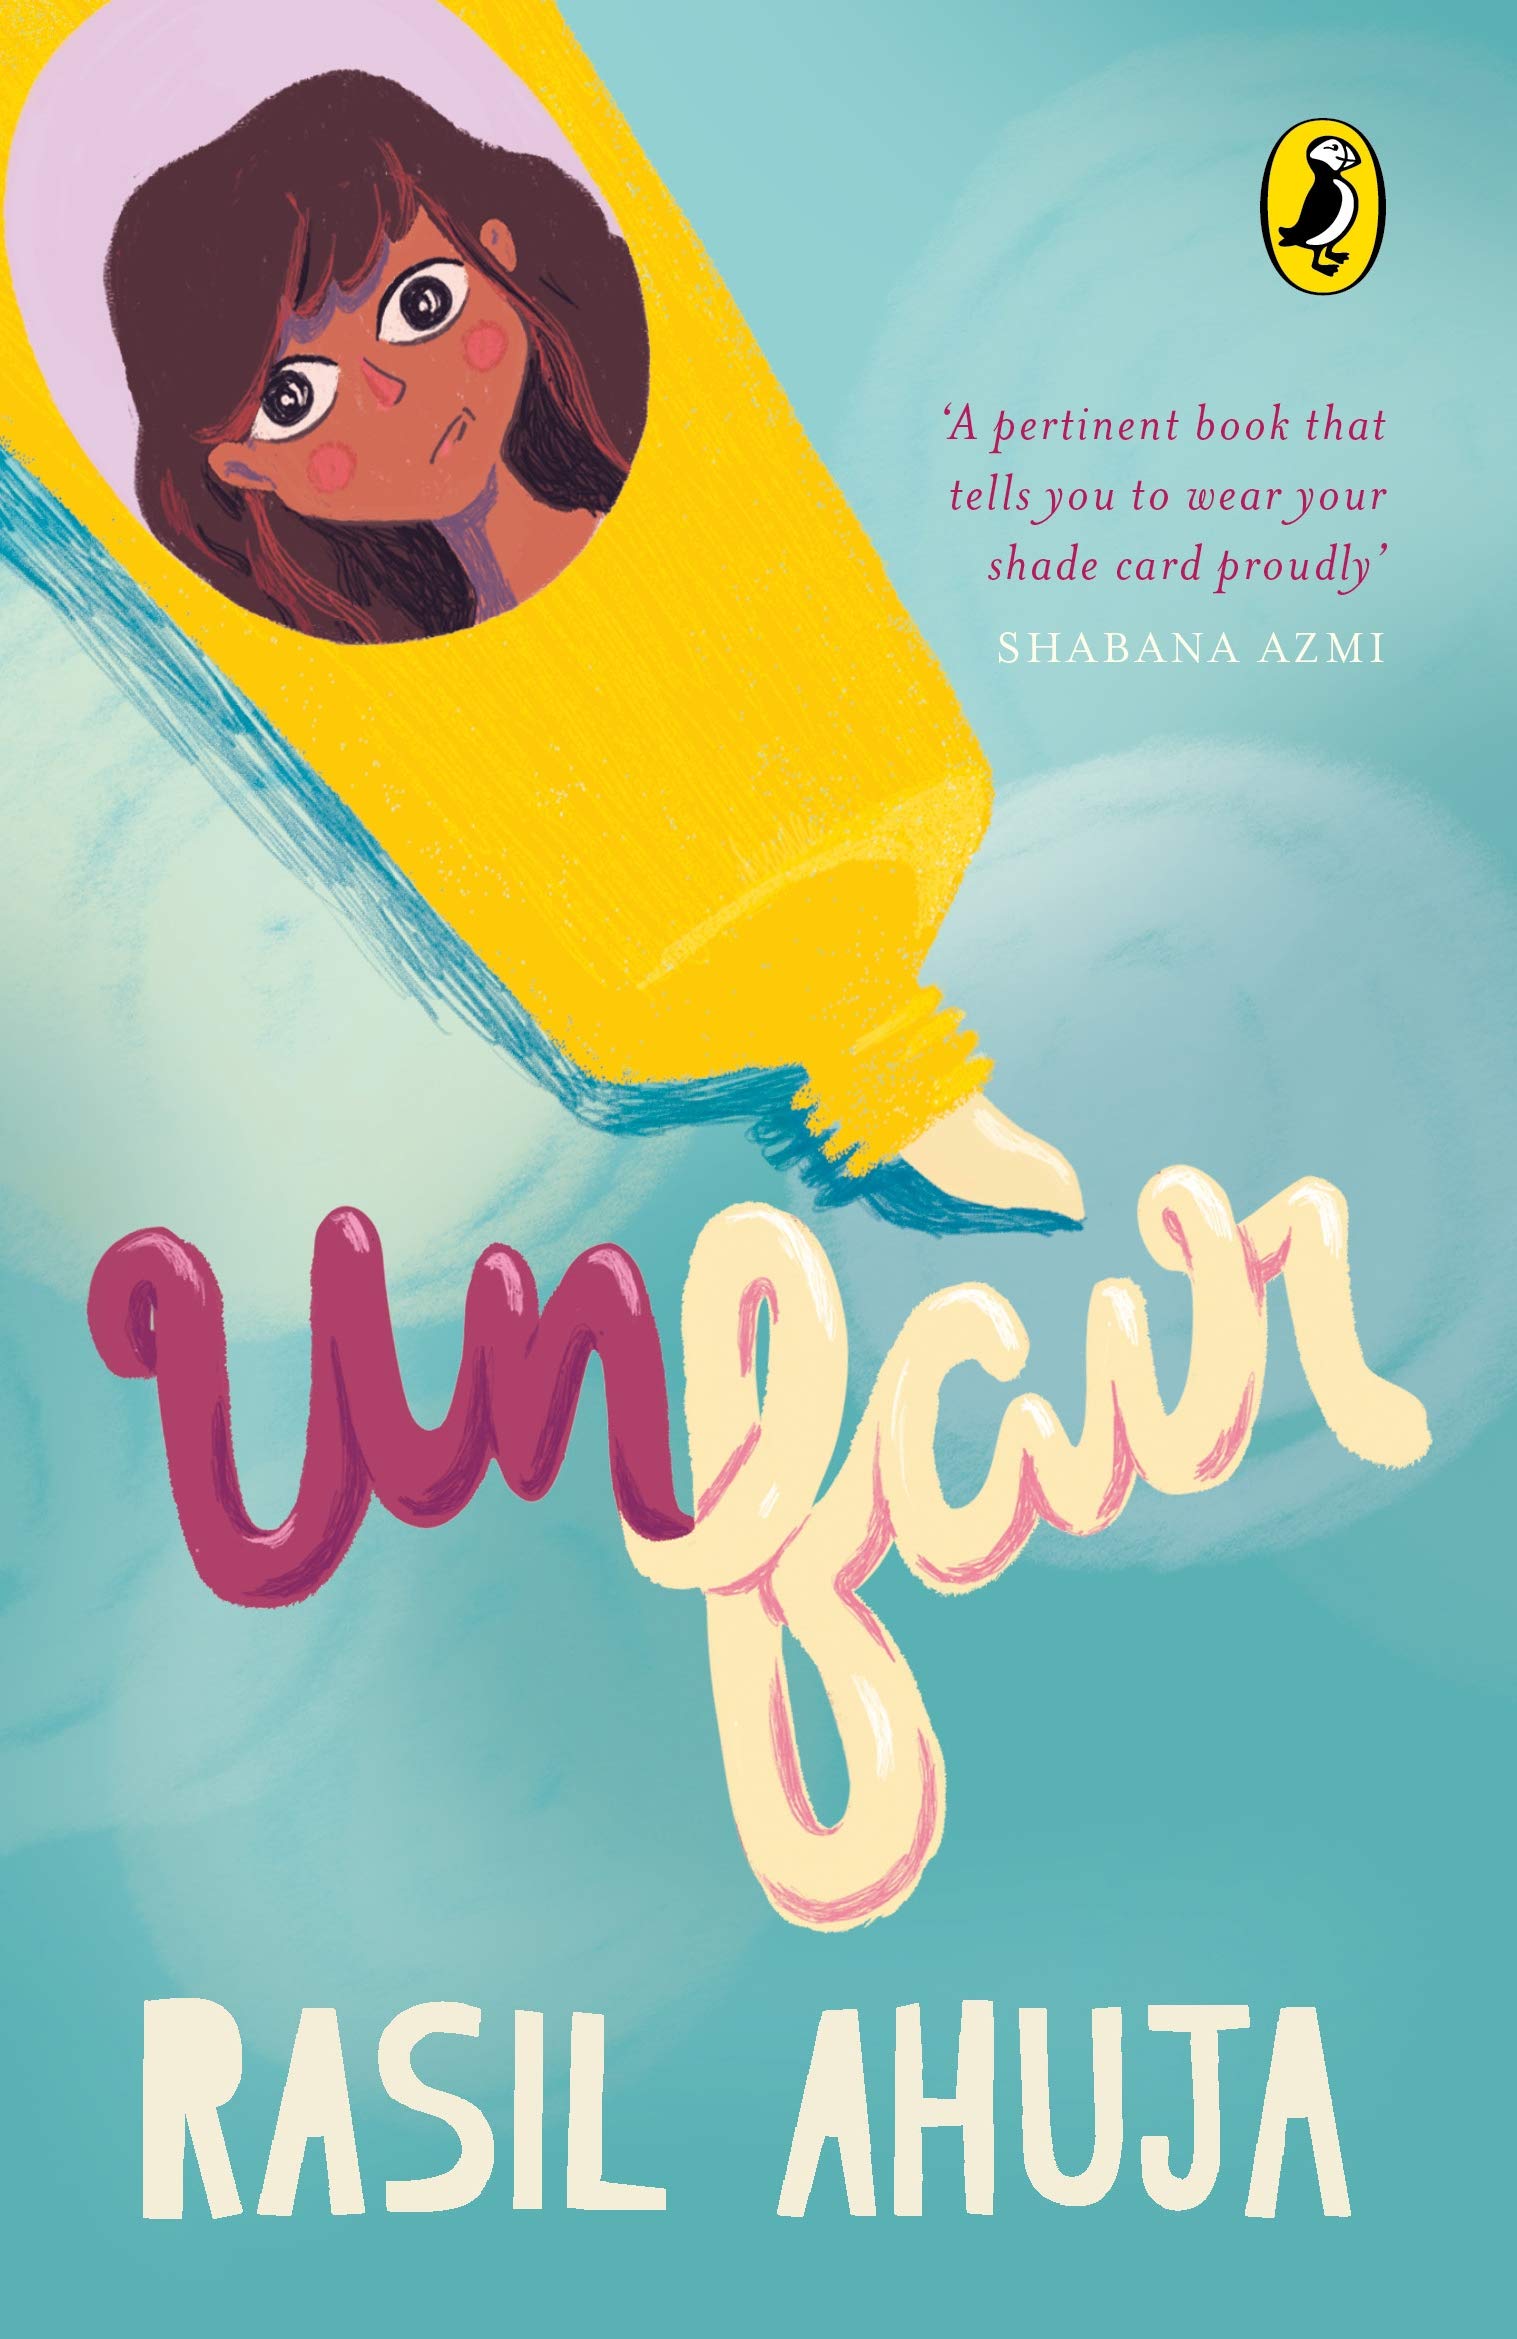 Book Cover
Unfair
Rasil Ahuja